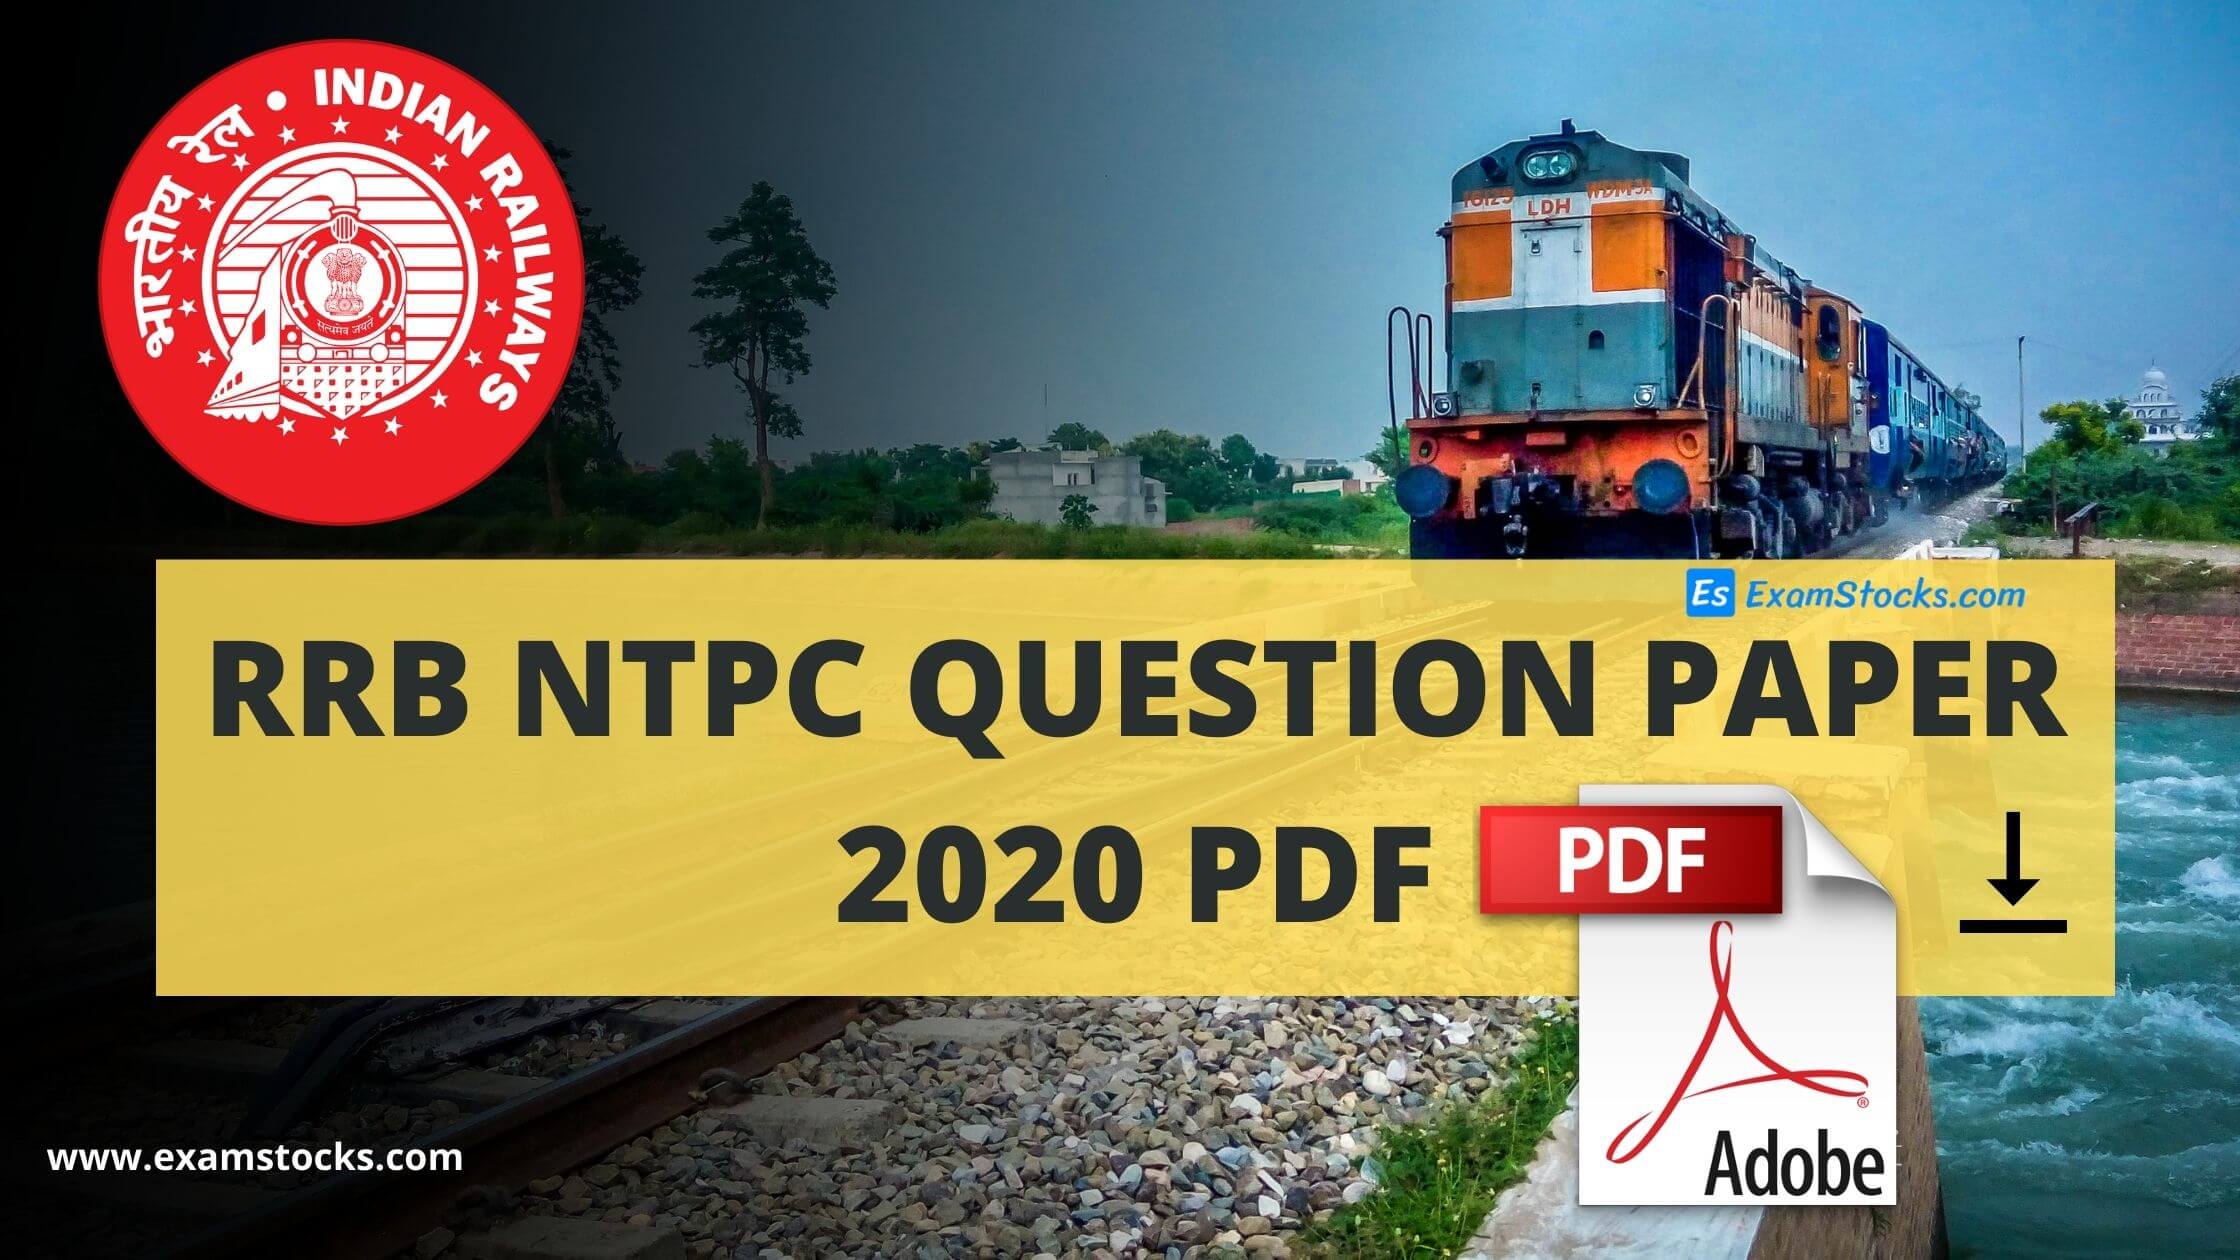 RRB NTPC Question Paper 2020 PDF Download